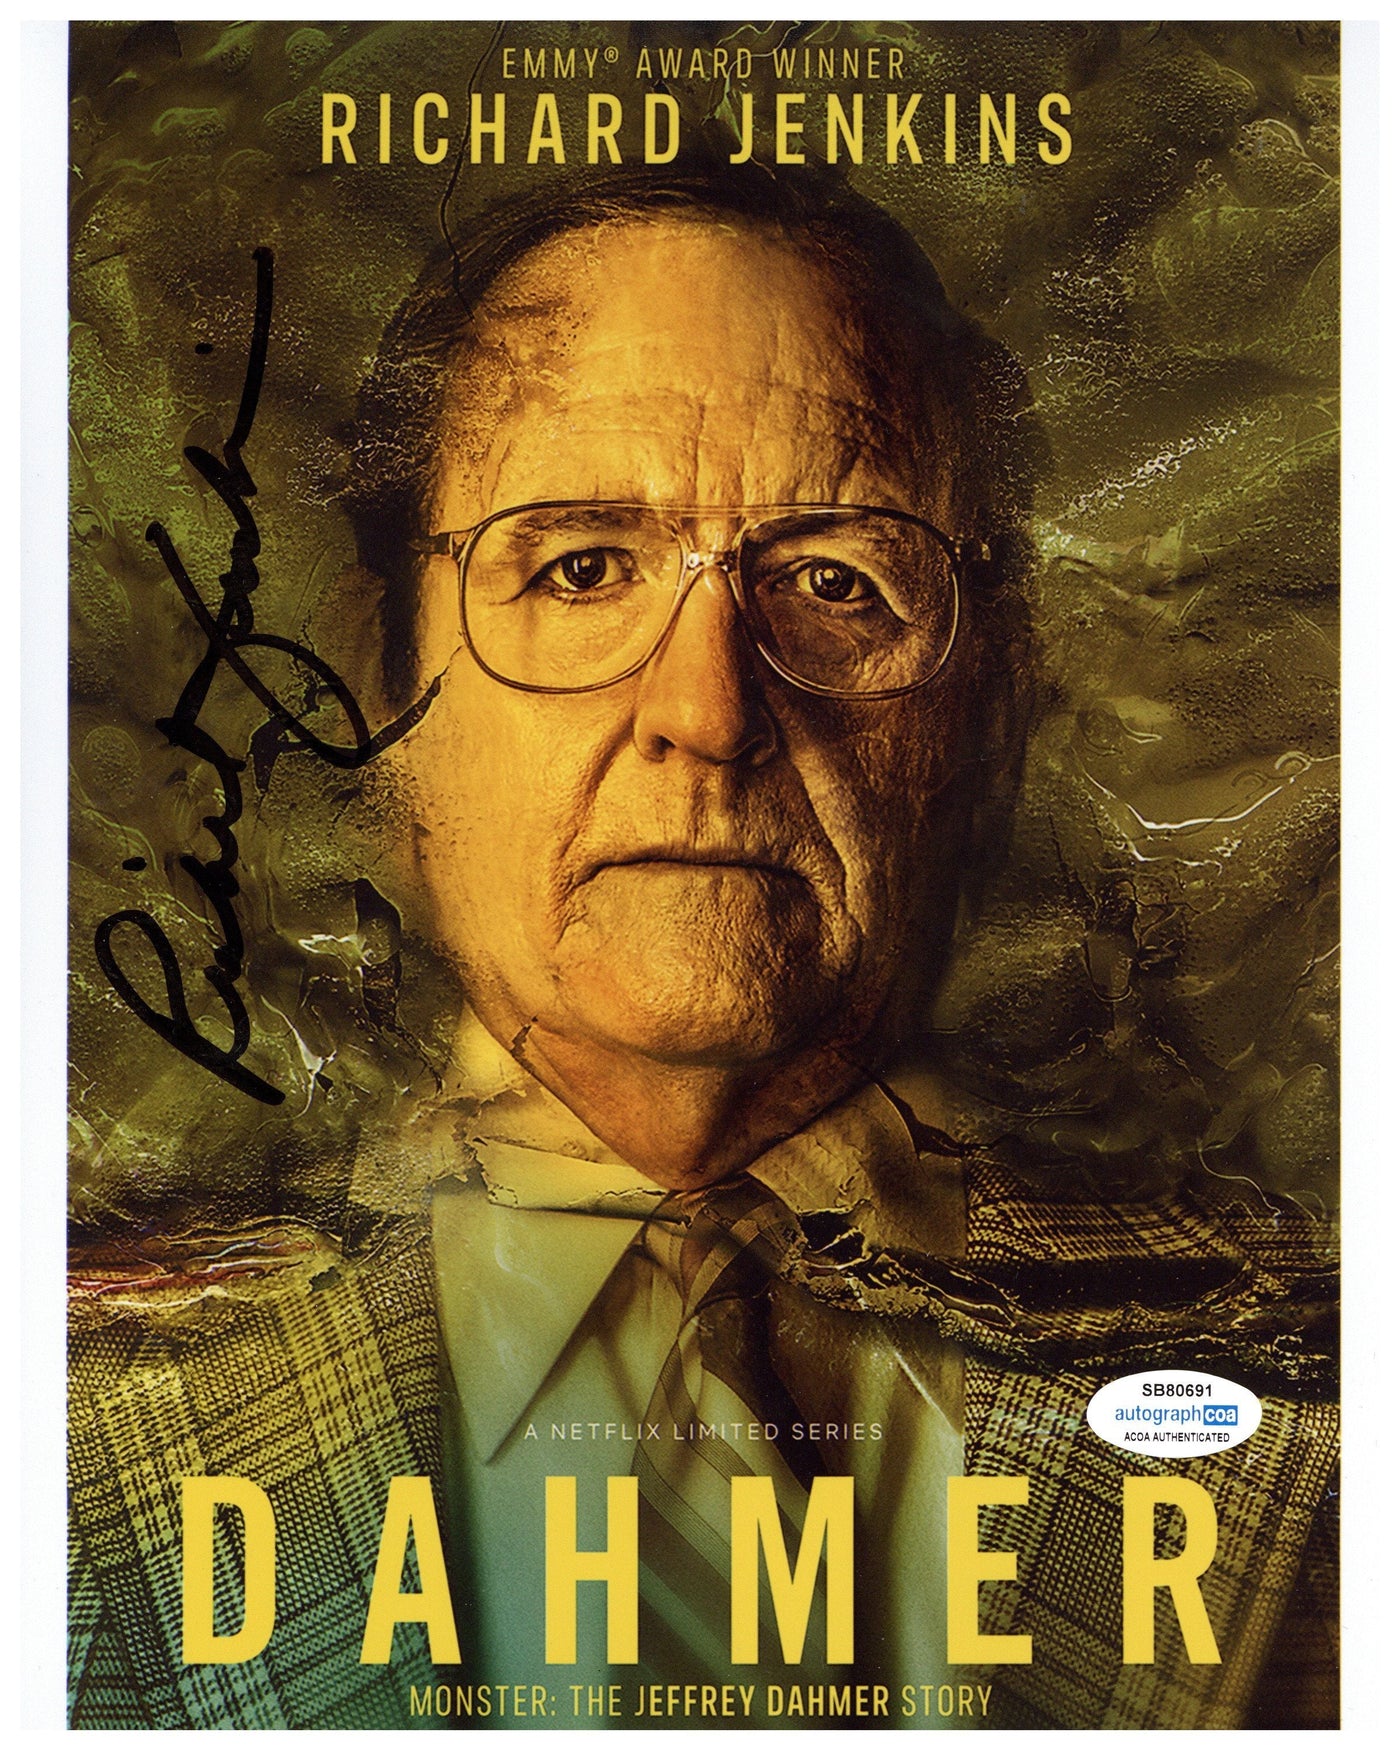 RICHARD JENKINS Signed 8x10 Photo Dahmer Autographed AutographCOA 2